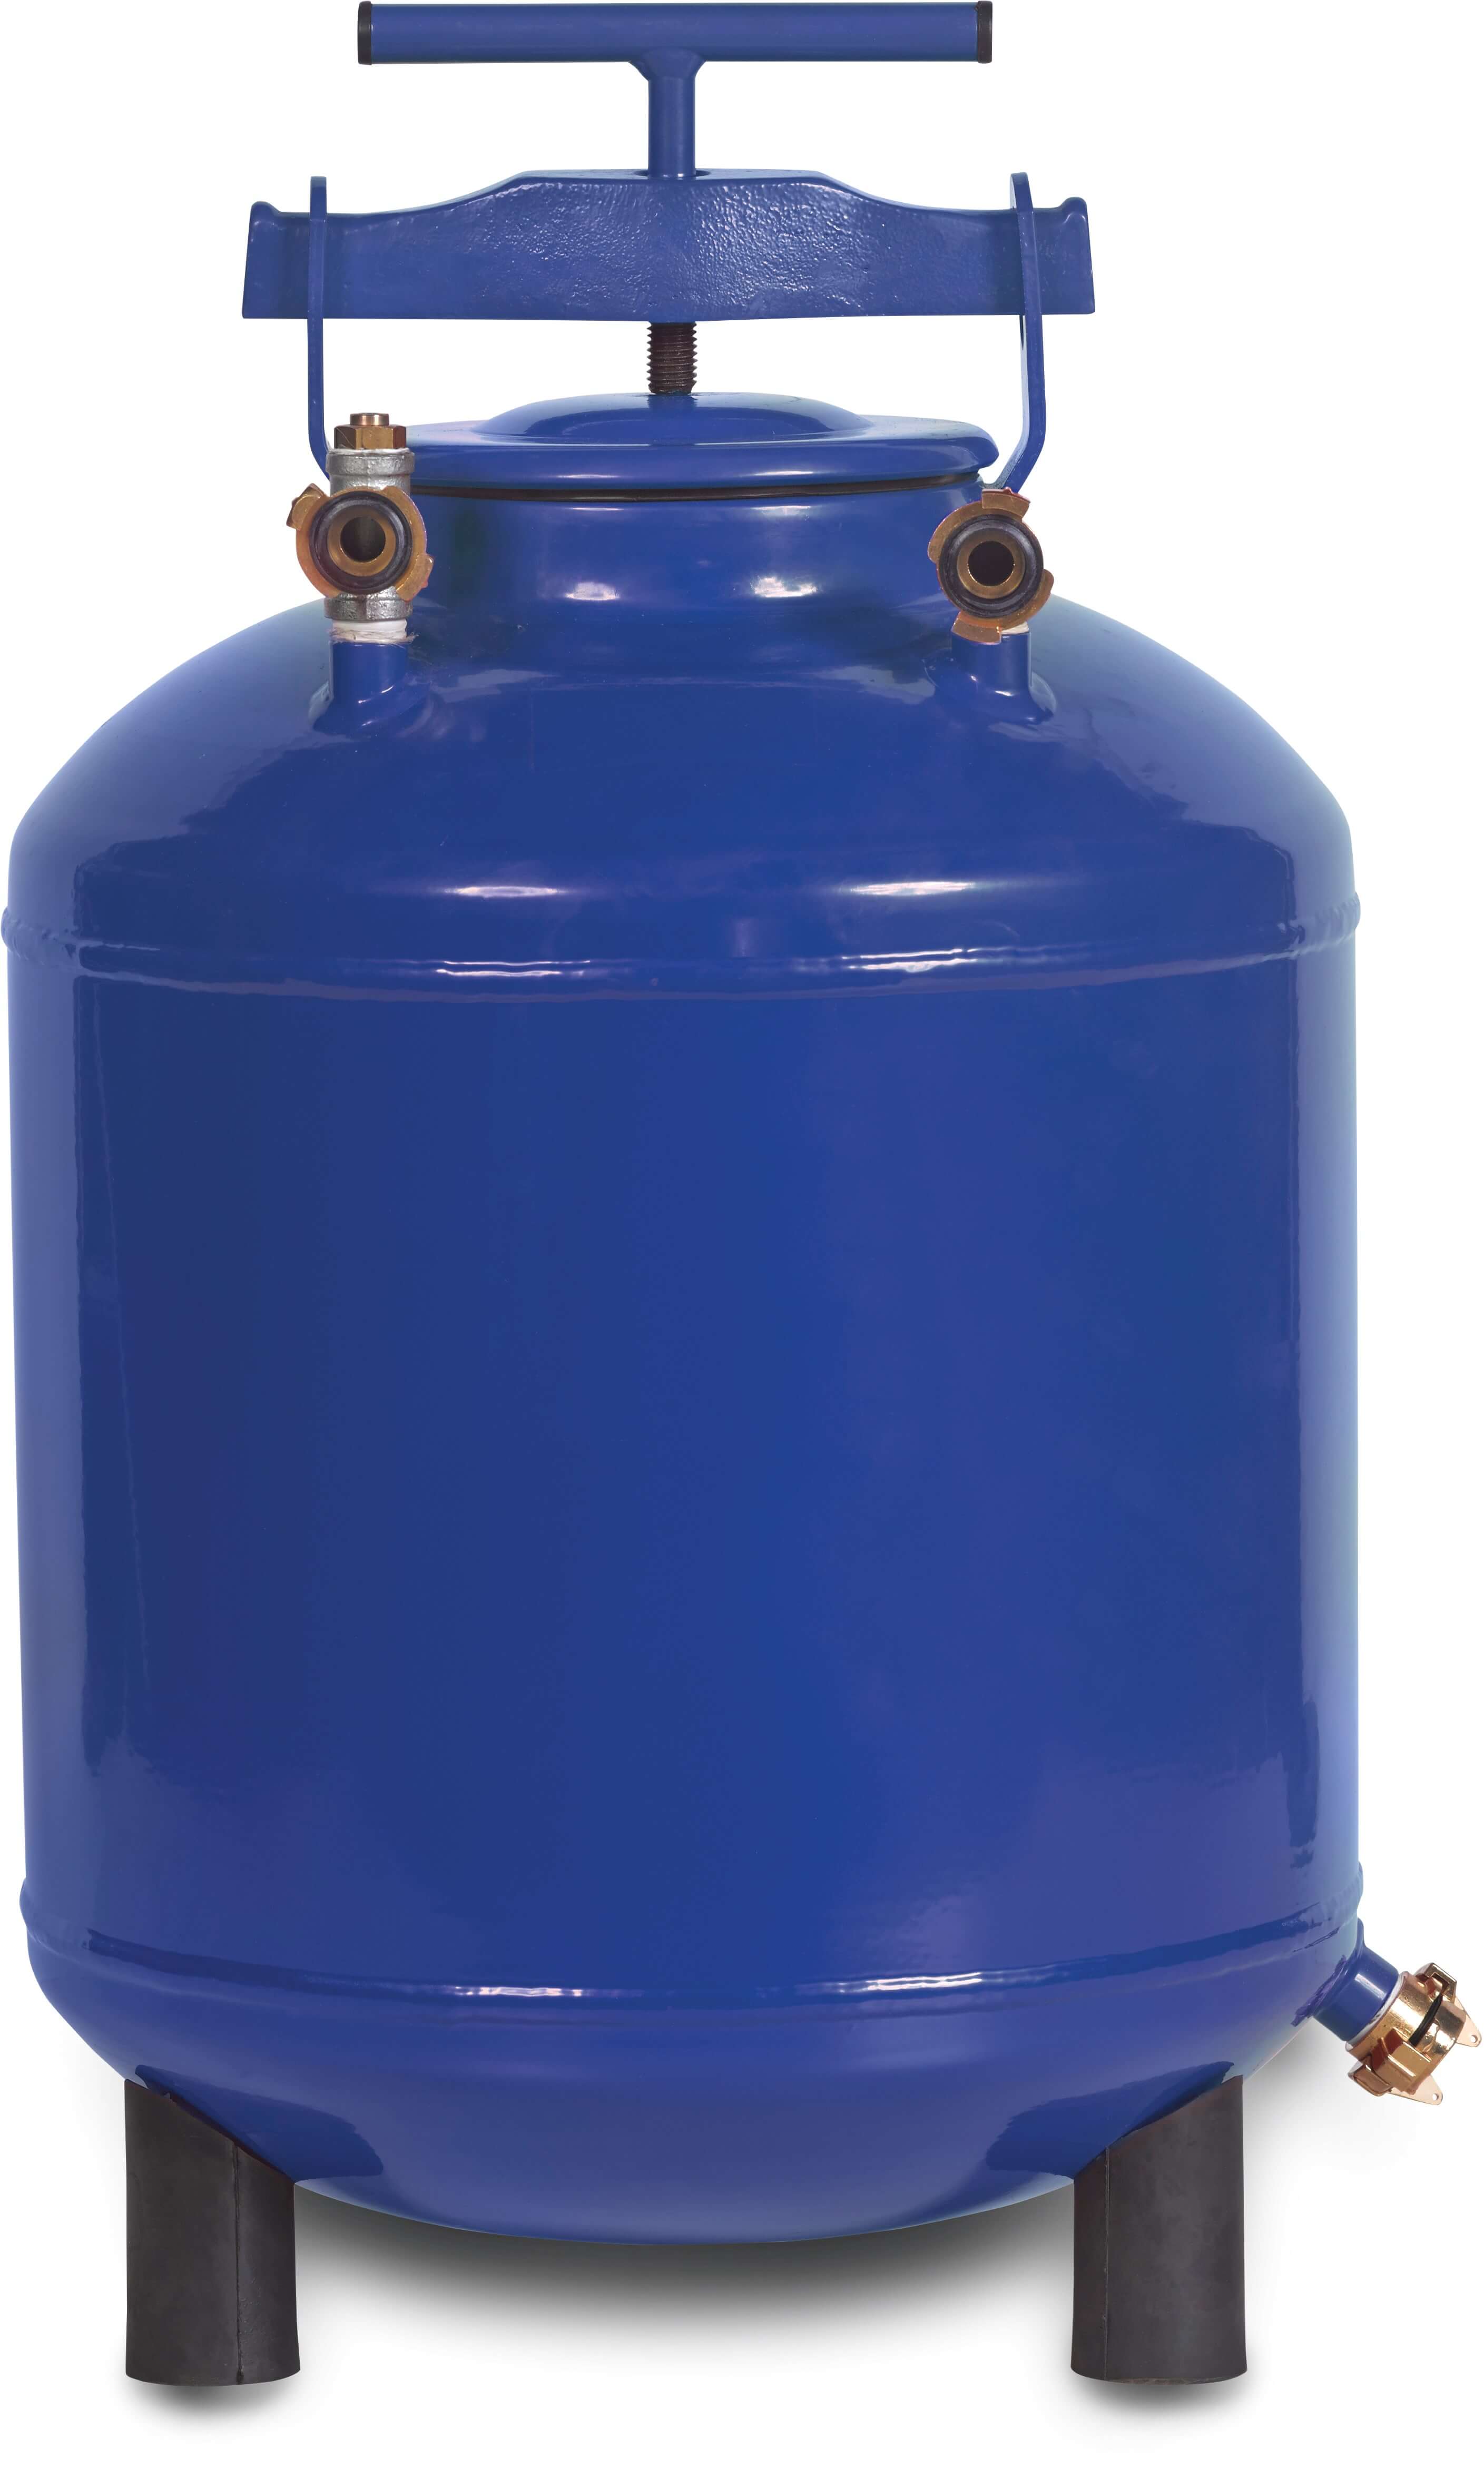 Yamit Fertilizer tank steel powdercoated 16" x 13 mm hose tail 8bar blue 30ltr type F520V vertical